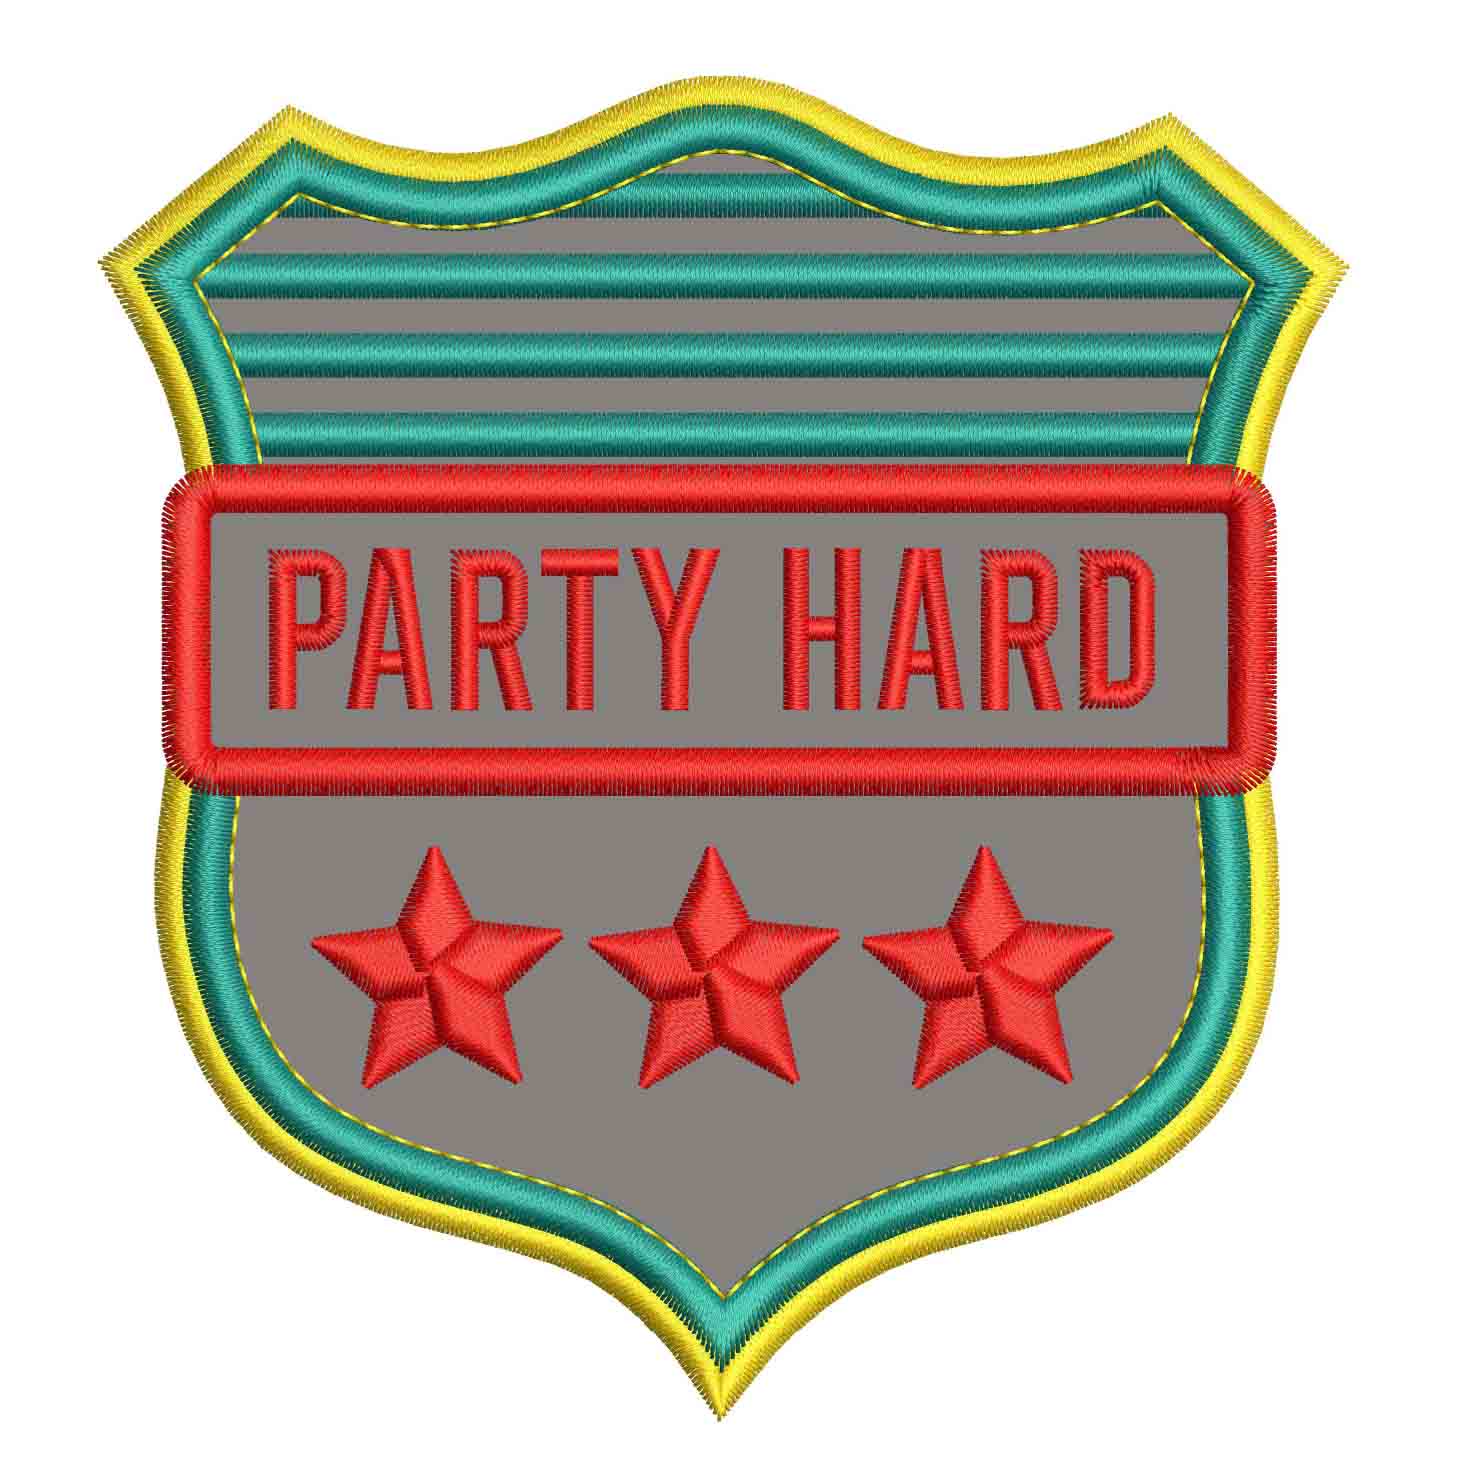 PARTY HARD APPLIQUE 4-5 INCH